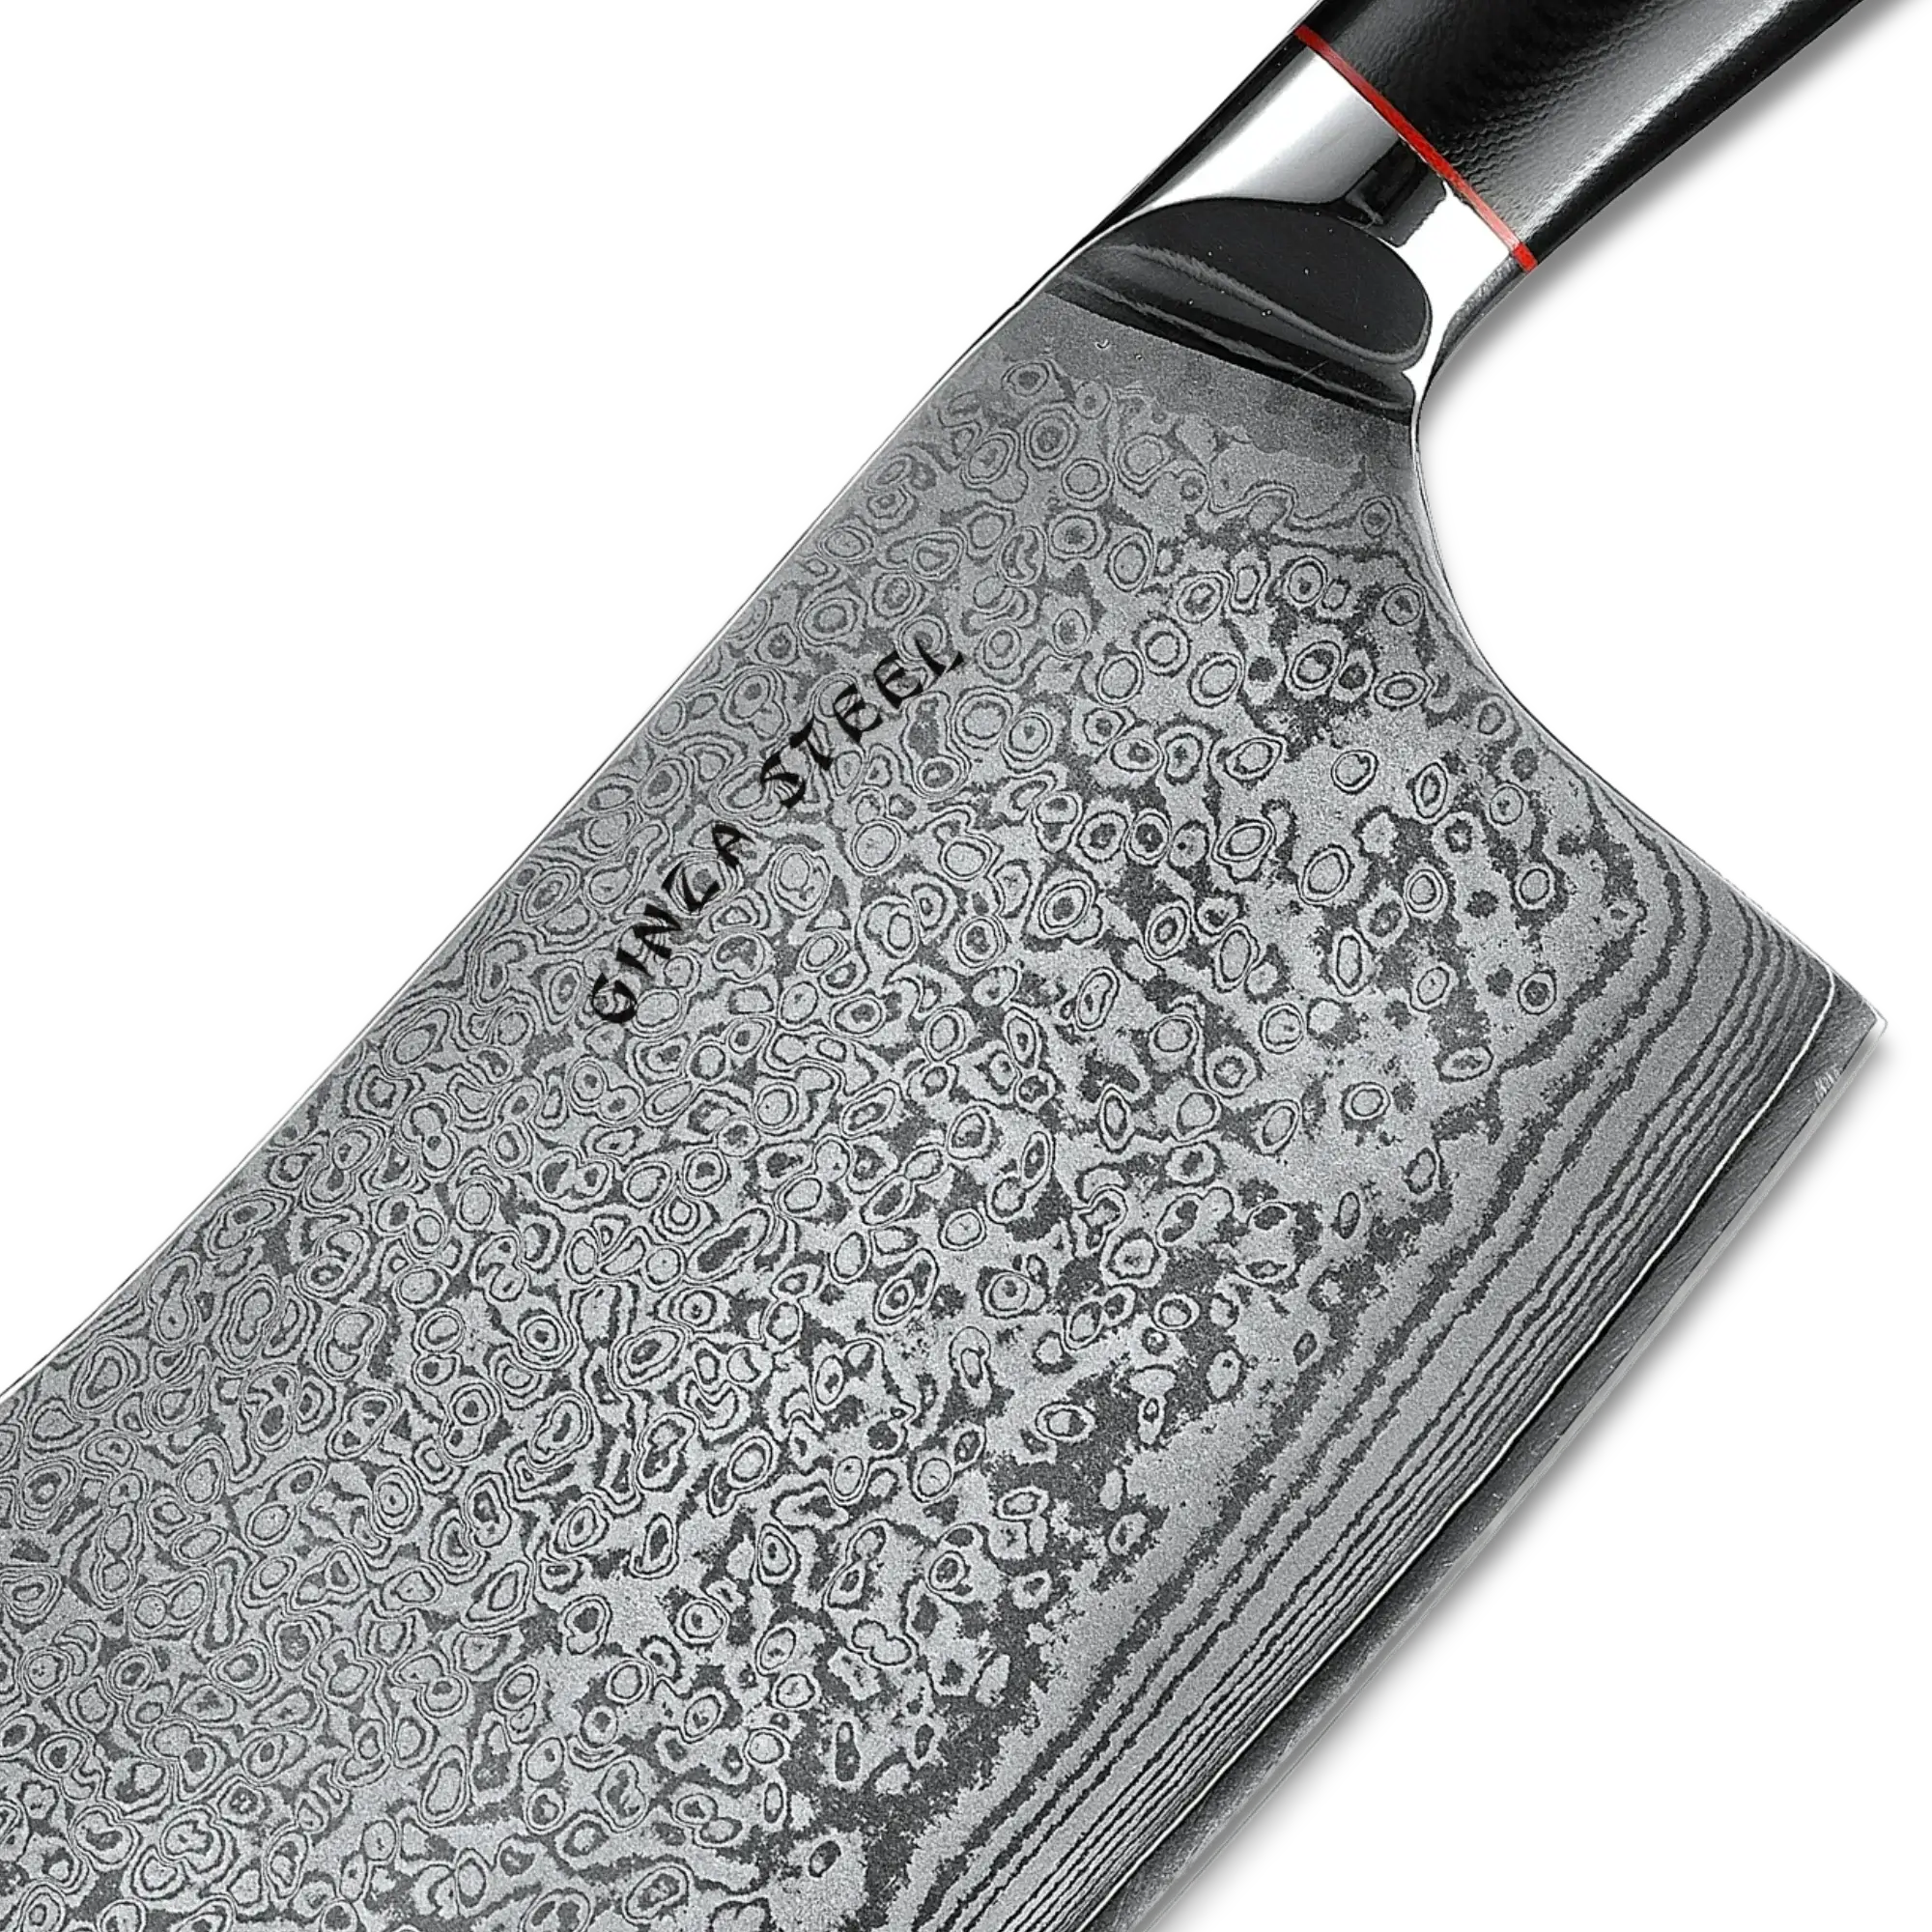 HAGAKURE Y | Chopping Knife 7" Damascus AUS 10 Steel